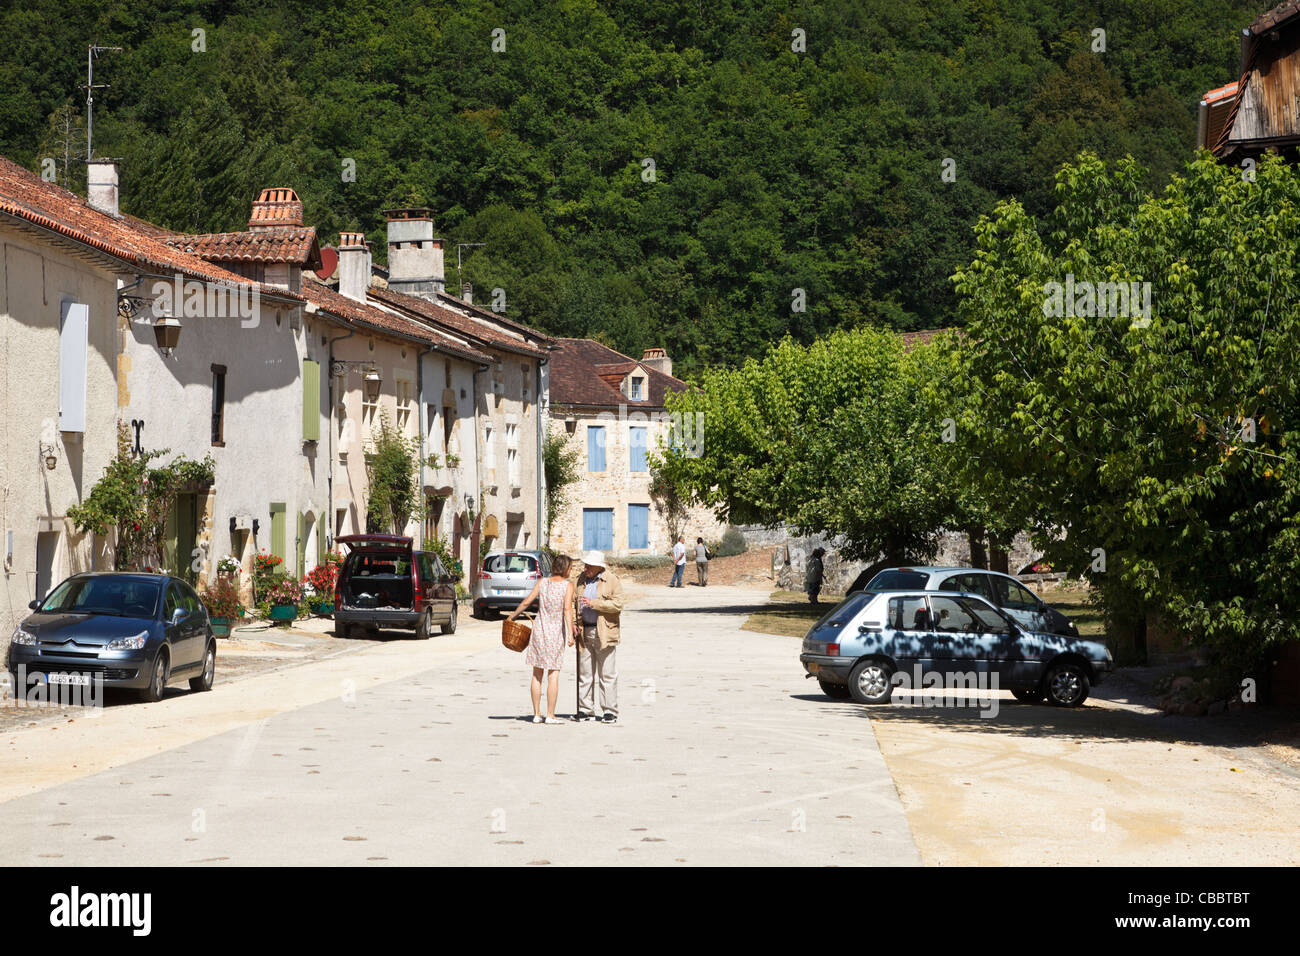 Dordogne, France - street scene in the village of St Jean de Cole Stock Photo